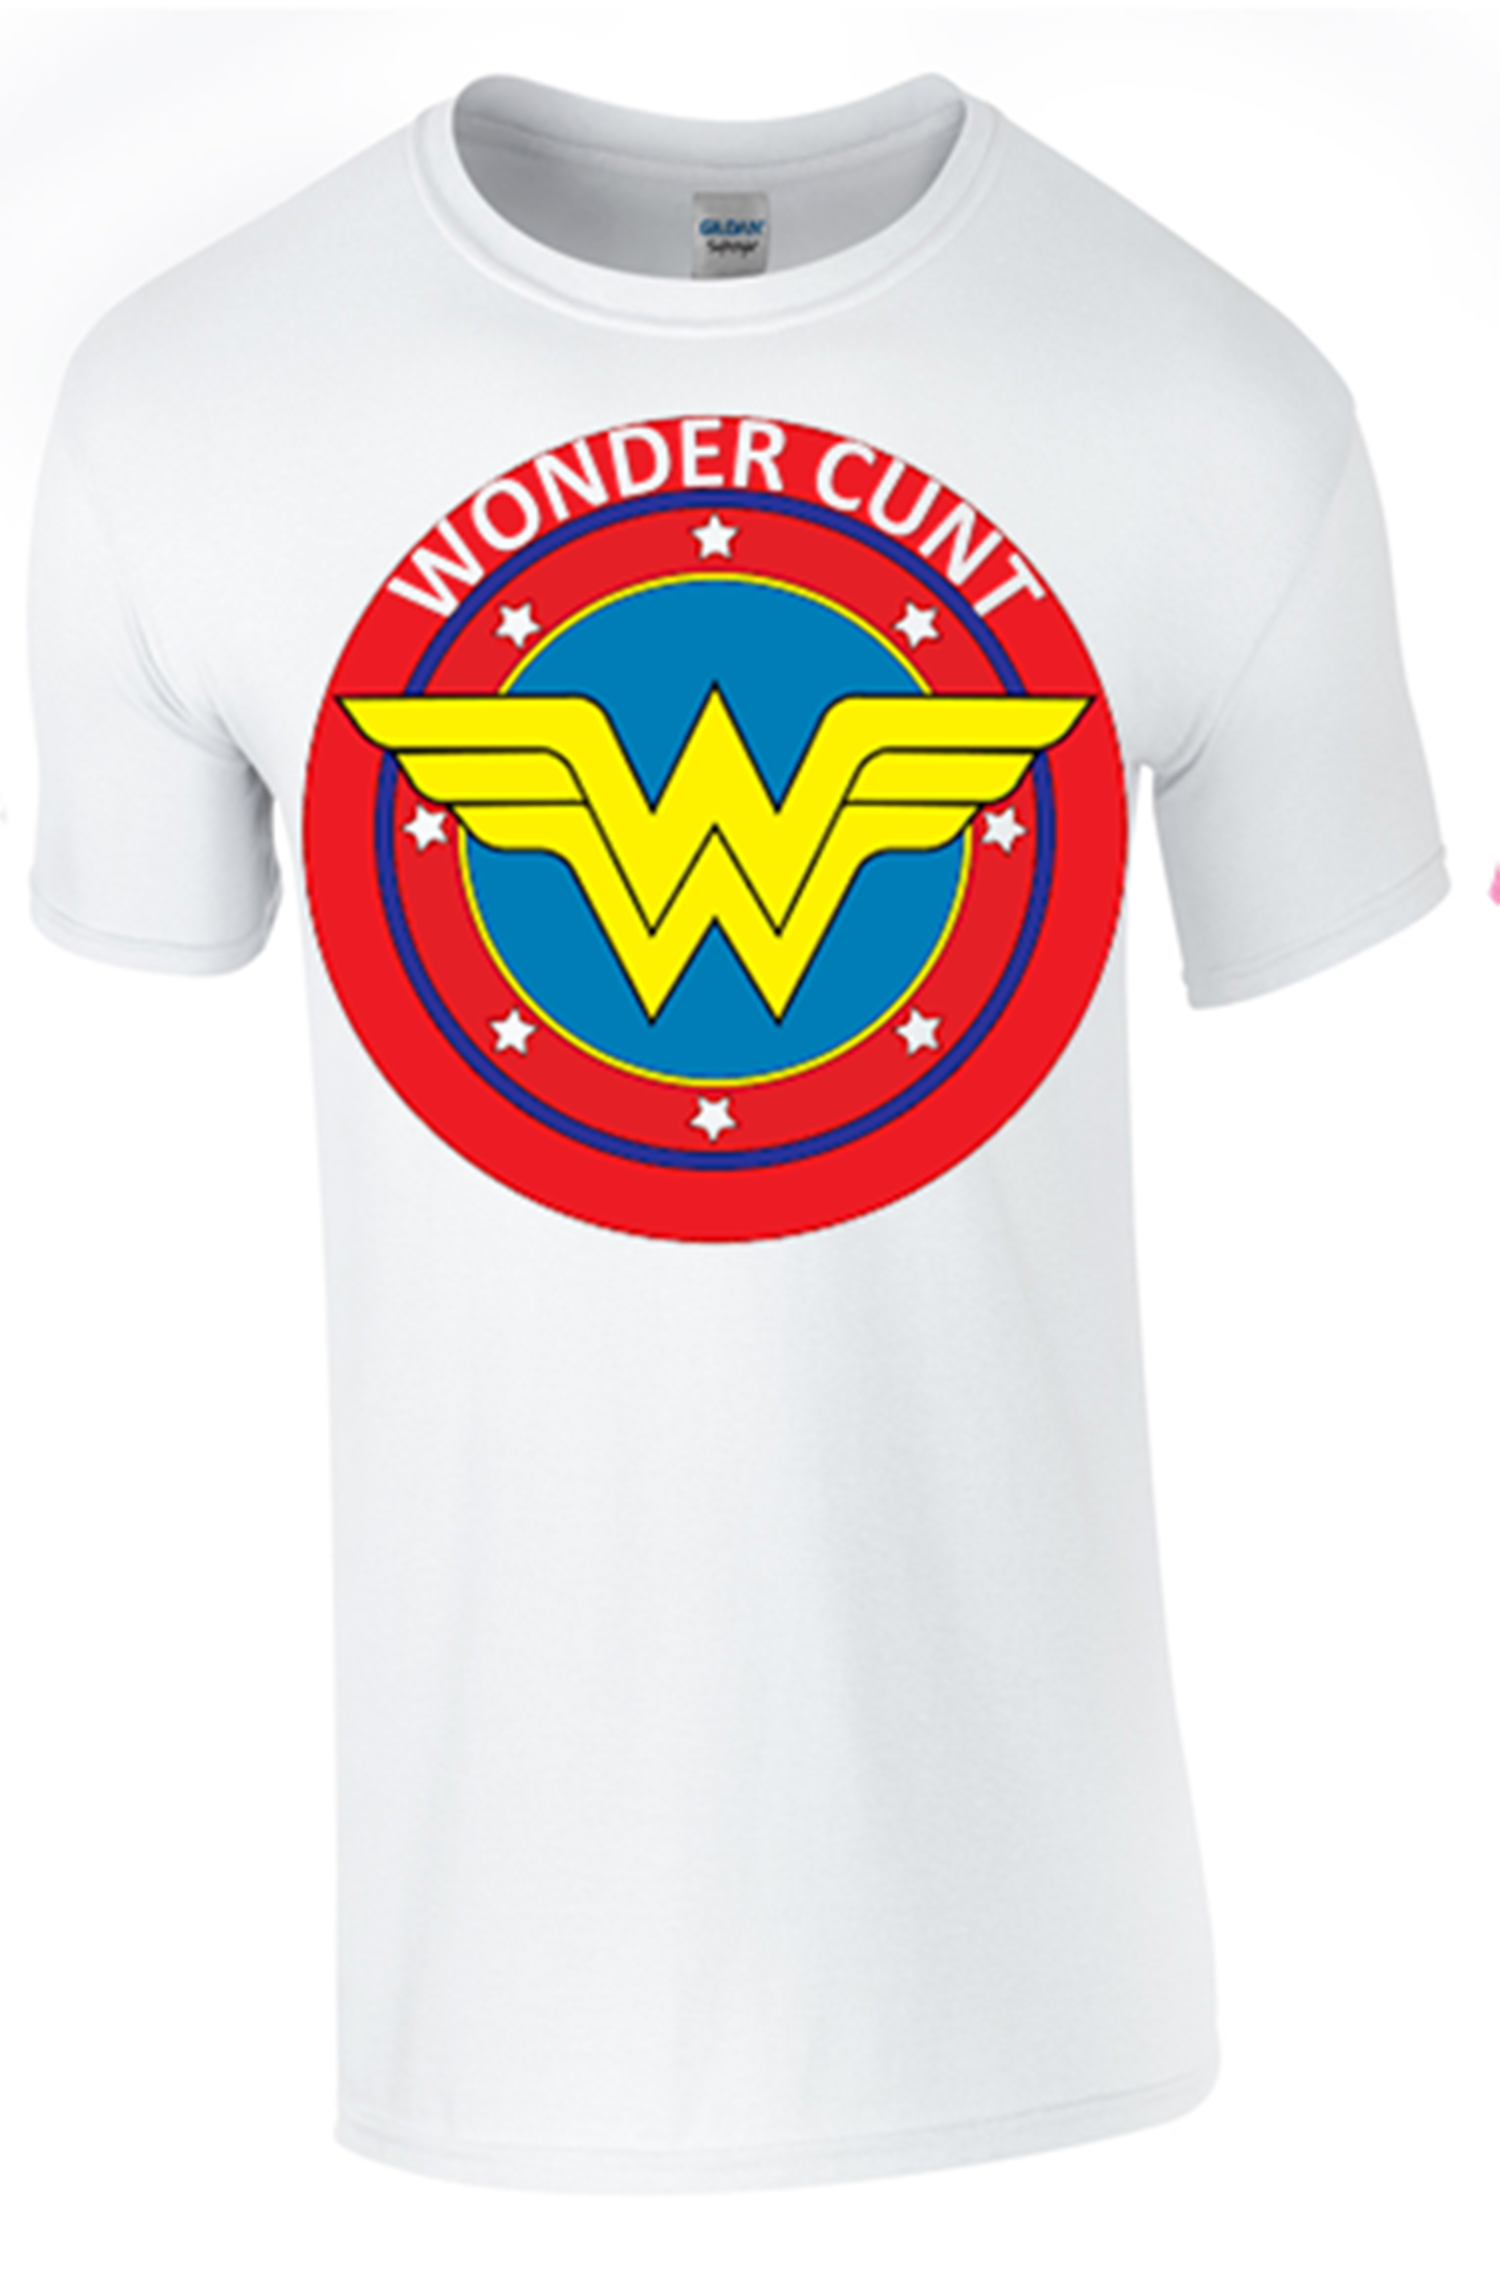 Wonder Woman / Wonder C*** T-Shirt - Army 1157 kit S / White Army 1157 Kit Veterans Owned Business